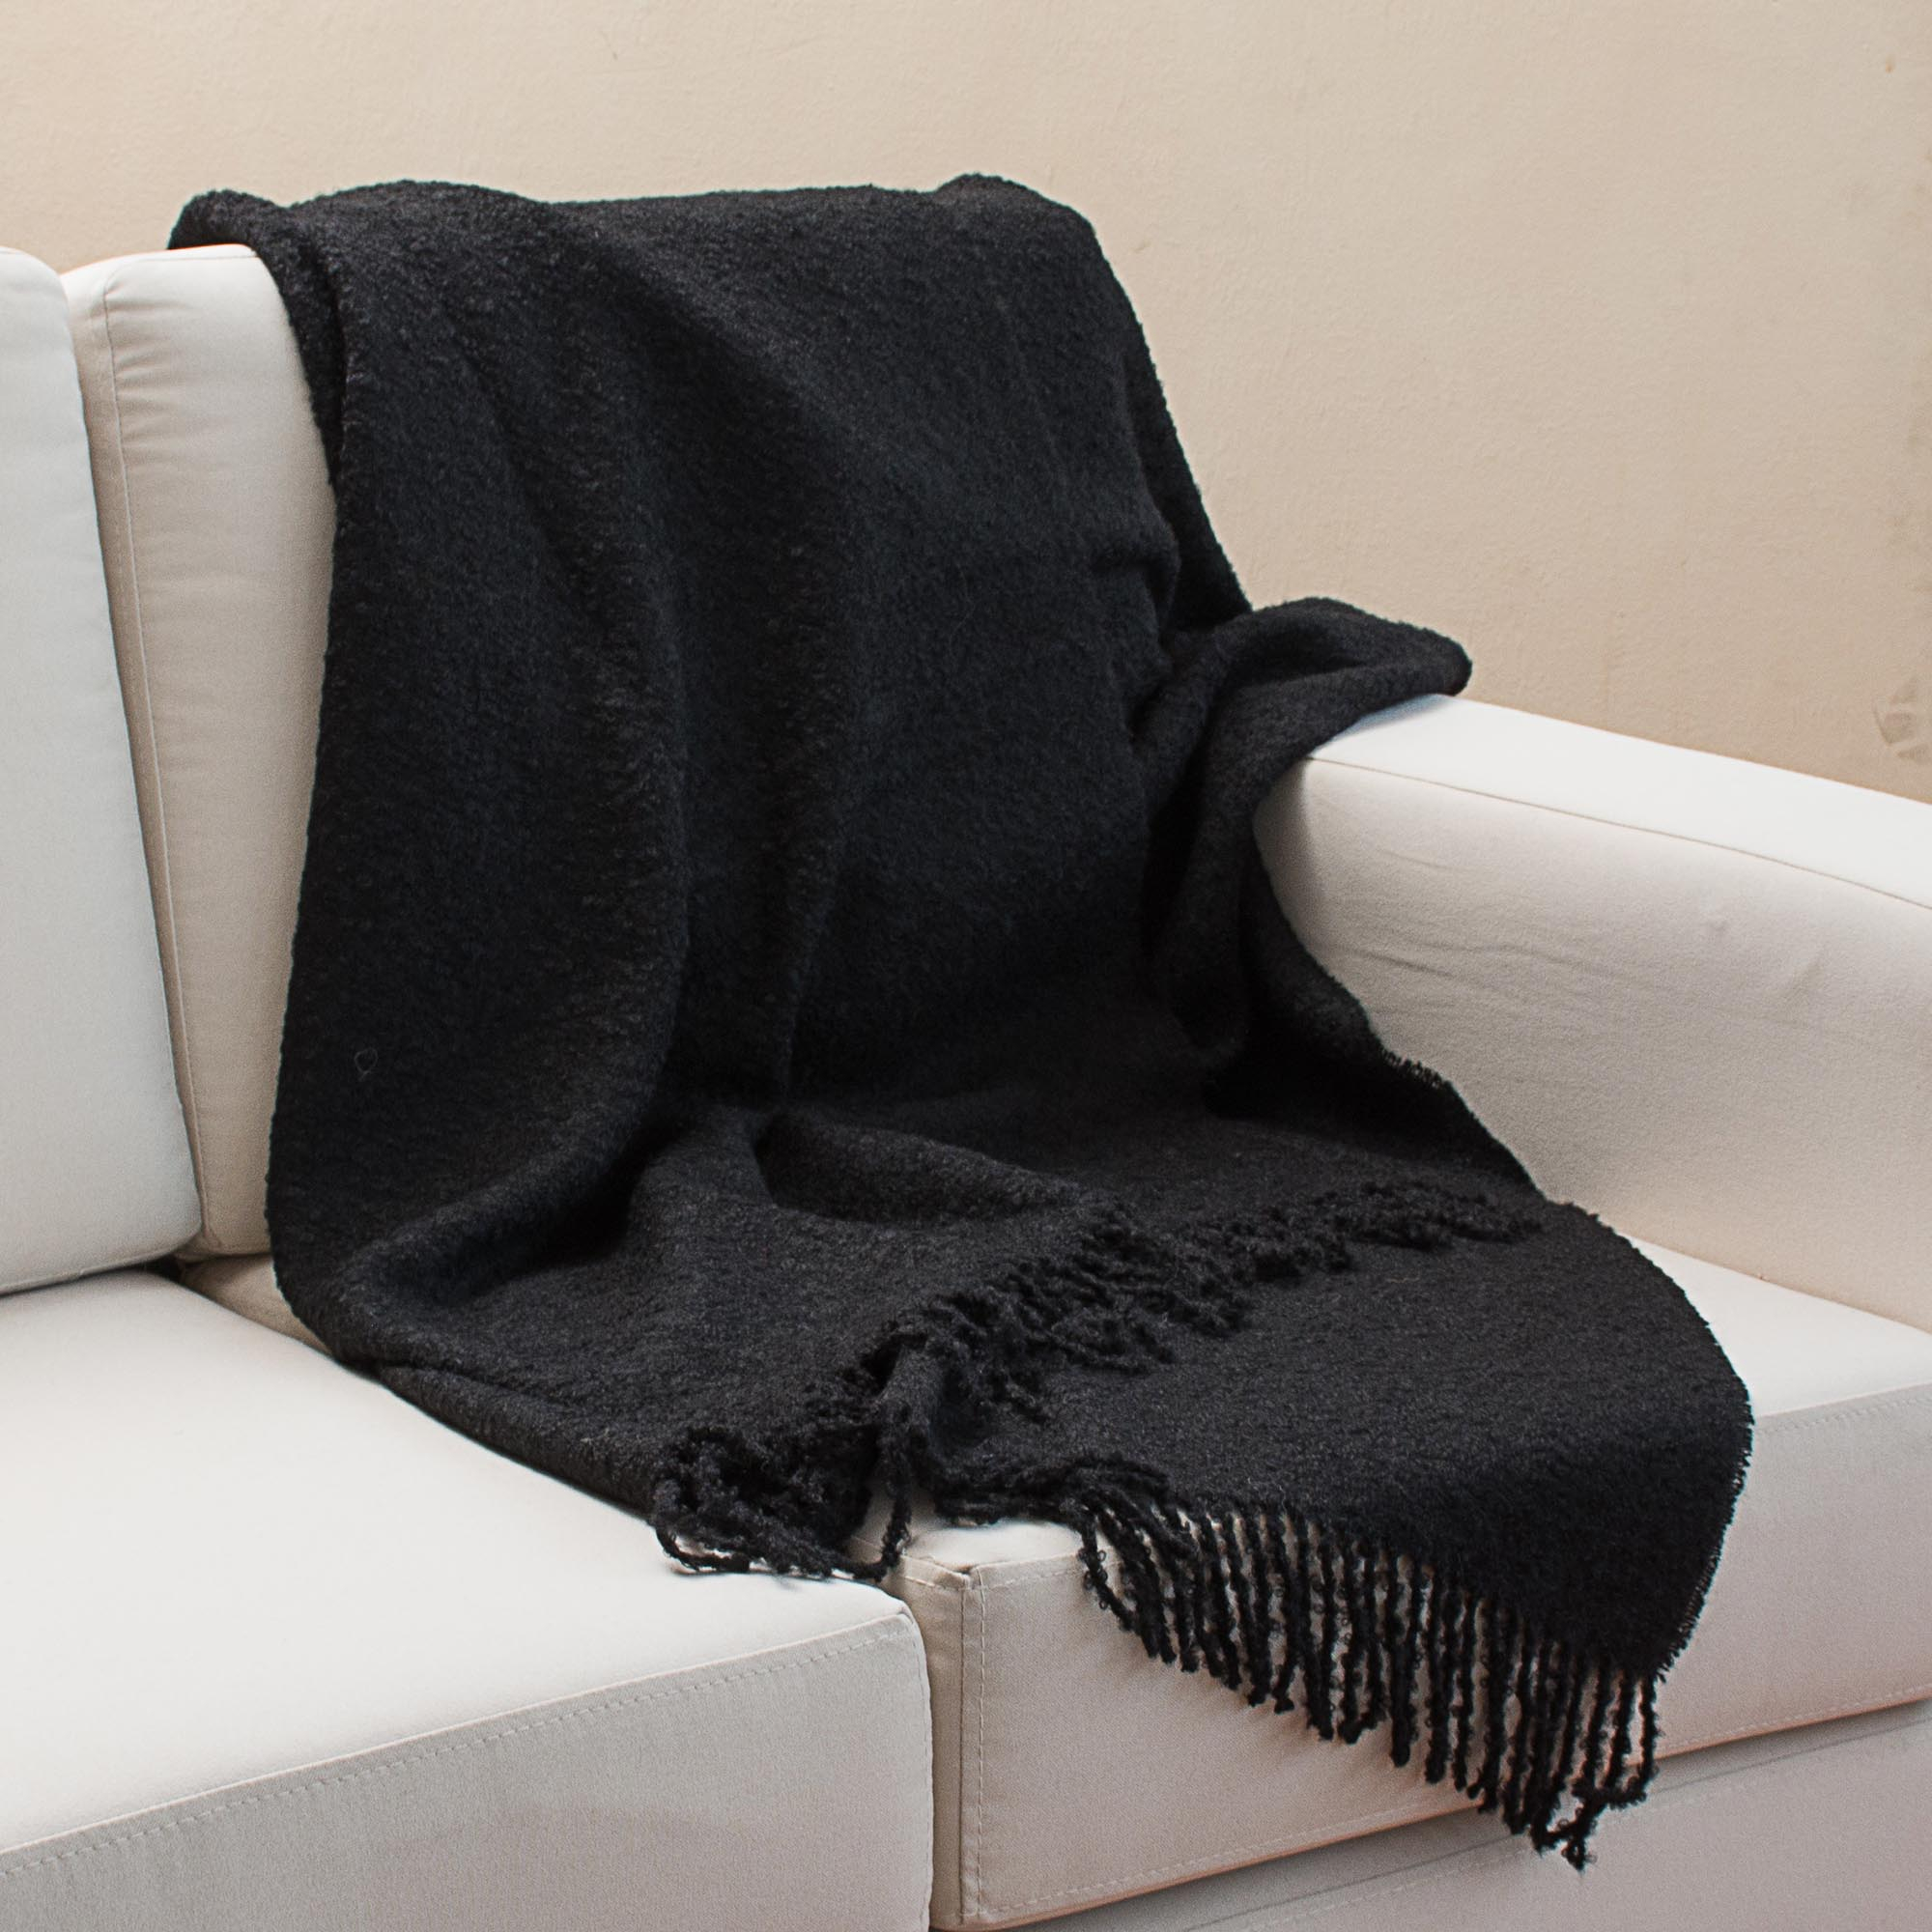 100 Alpaca Throw Blanket In Solid Black From Peru Andean Comfort In Black NOVICA